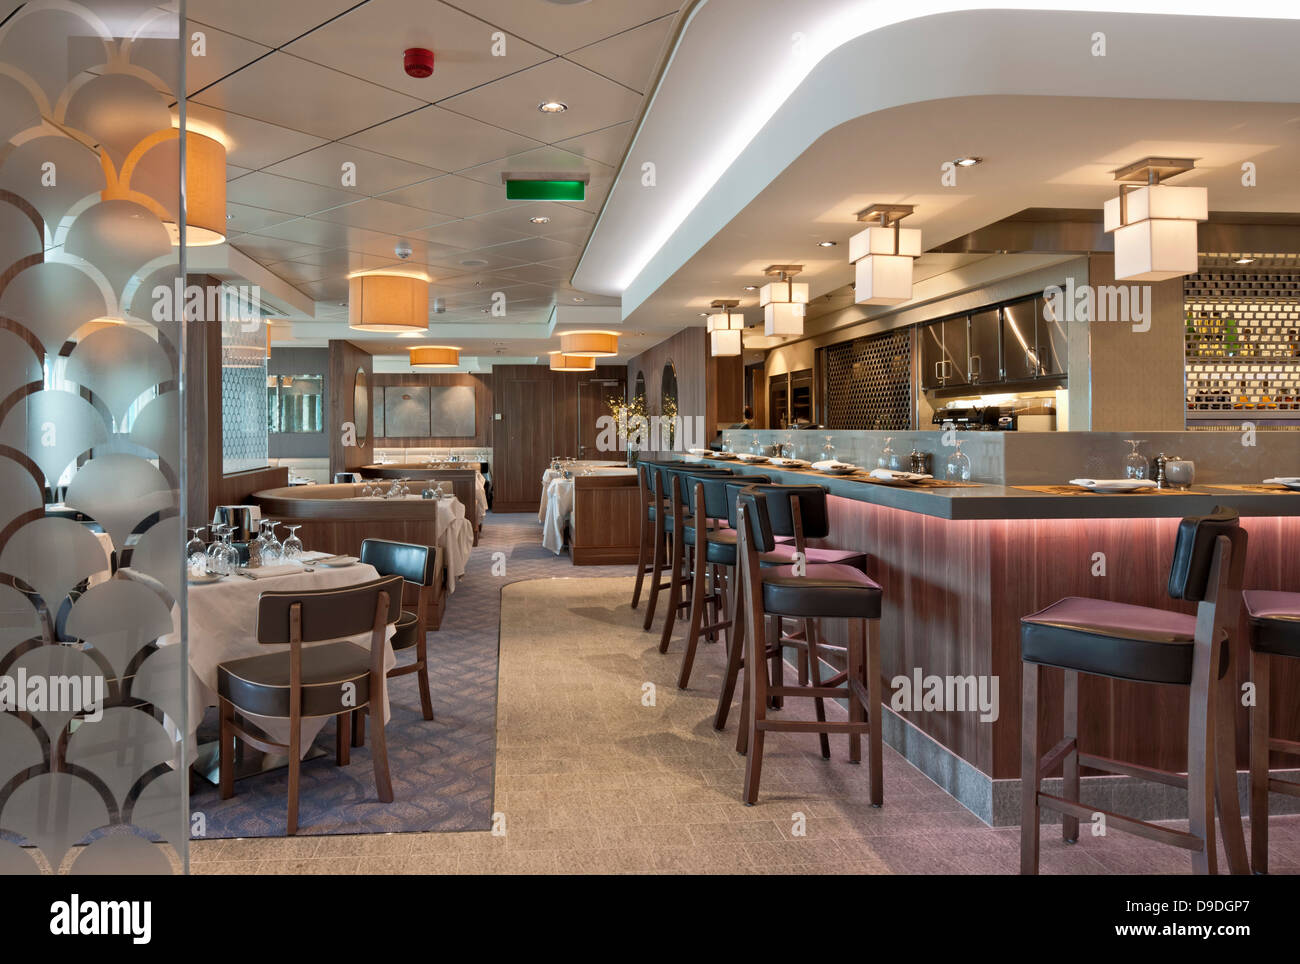 Norwegian Breakaway Cruise Liner, Southampton, United Kingdom. Architect: SMC Design, 2013. Restaurant. Stock Photo